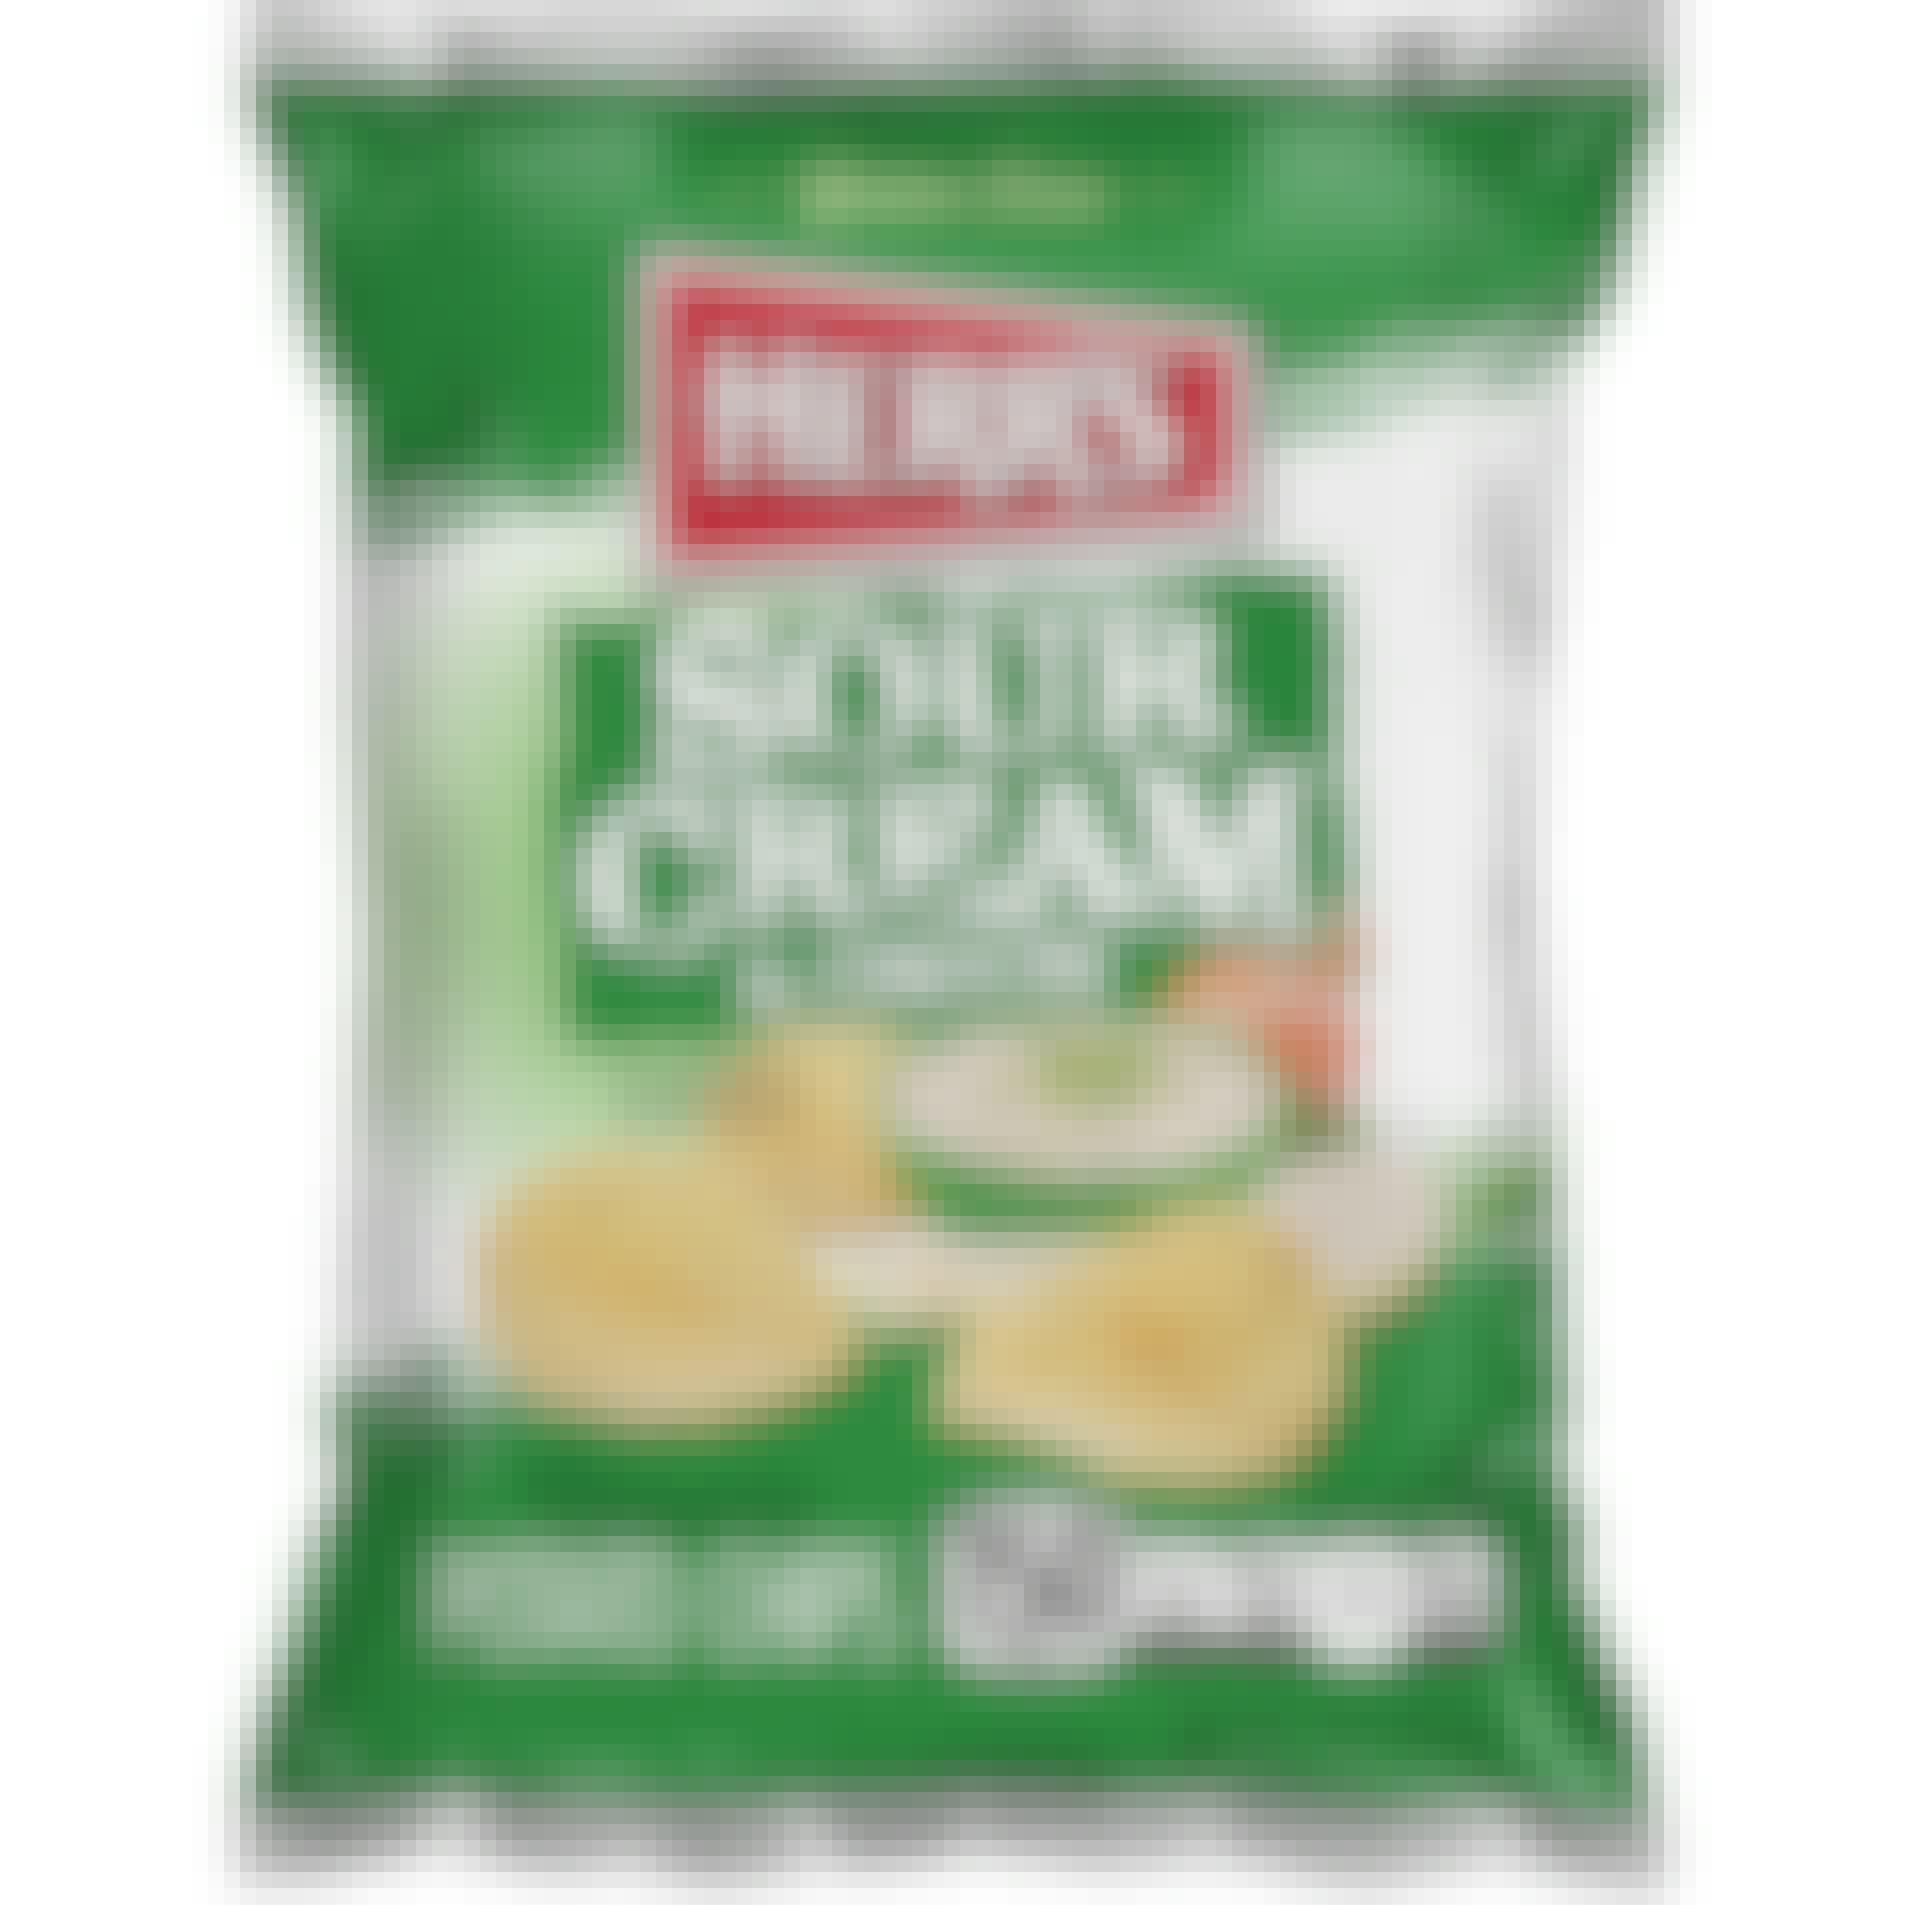 Herr's Sour Cream and Onion Potato Chips